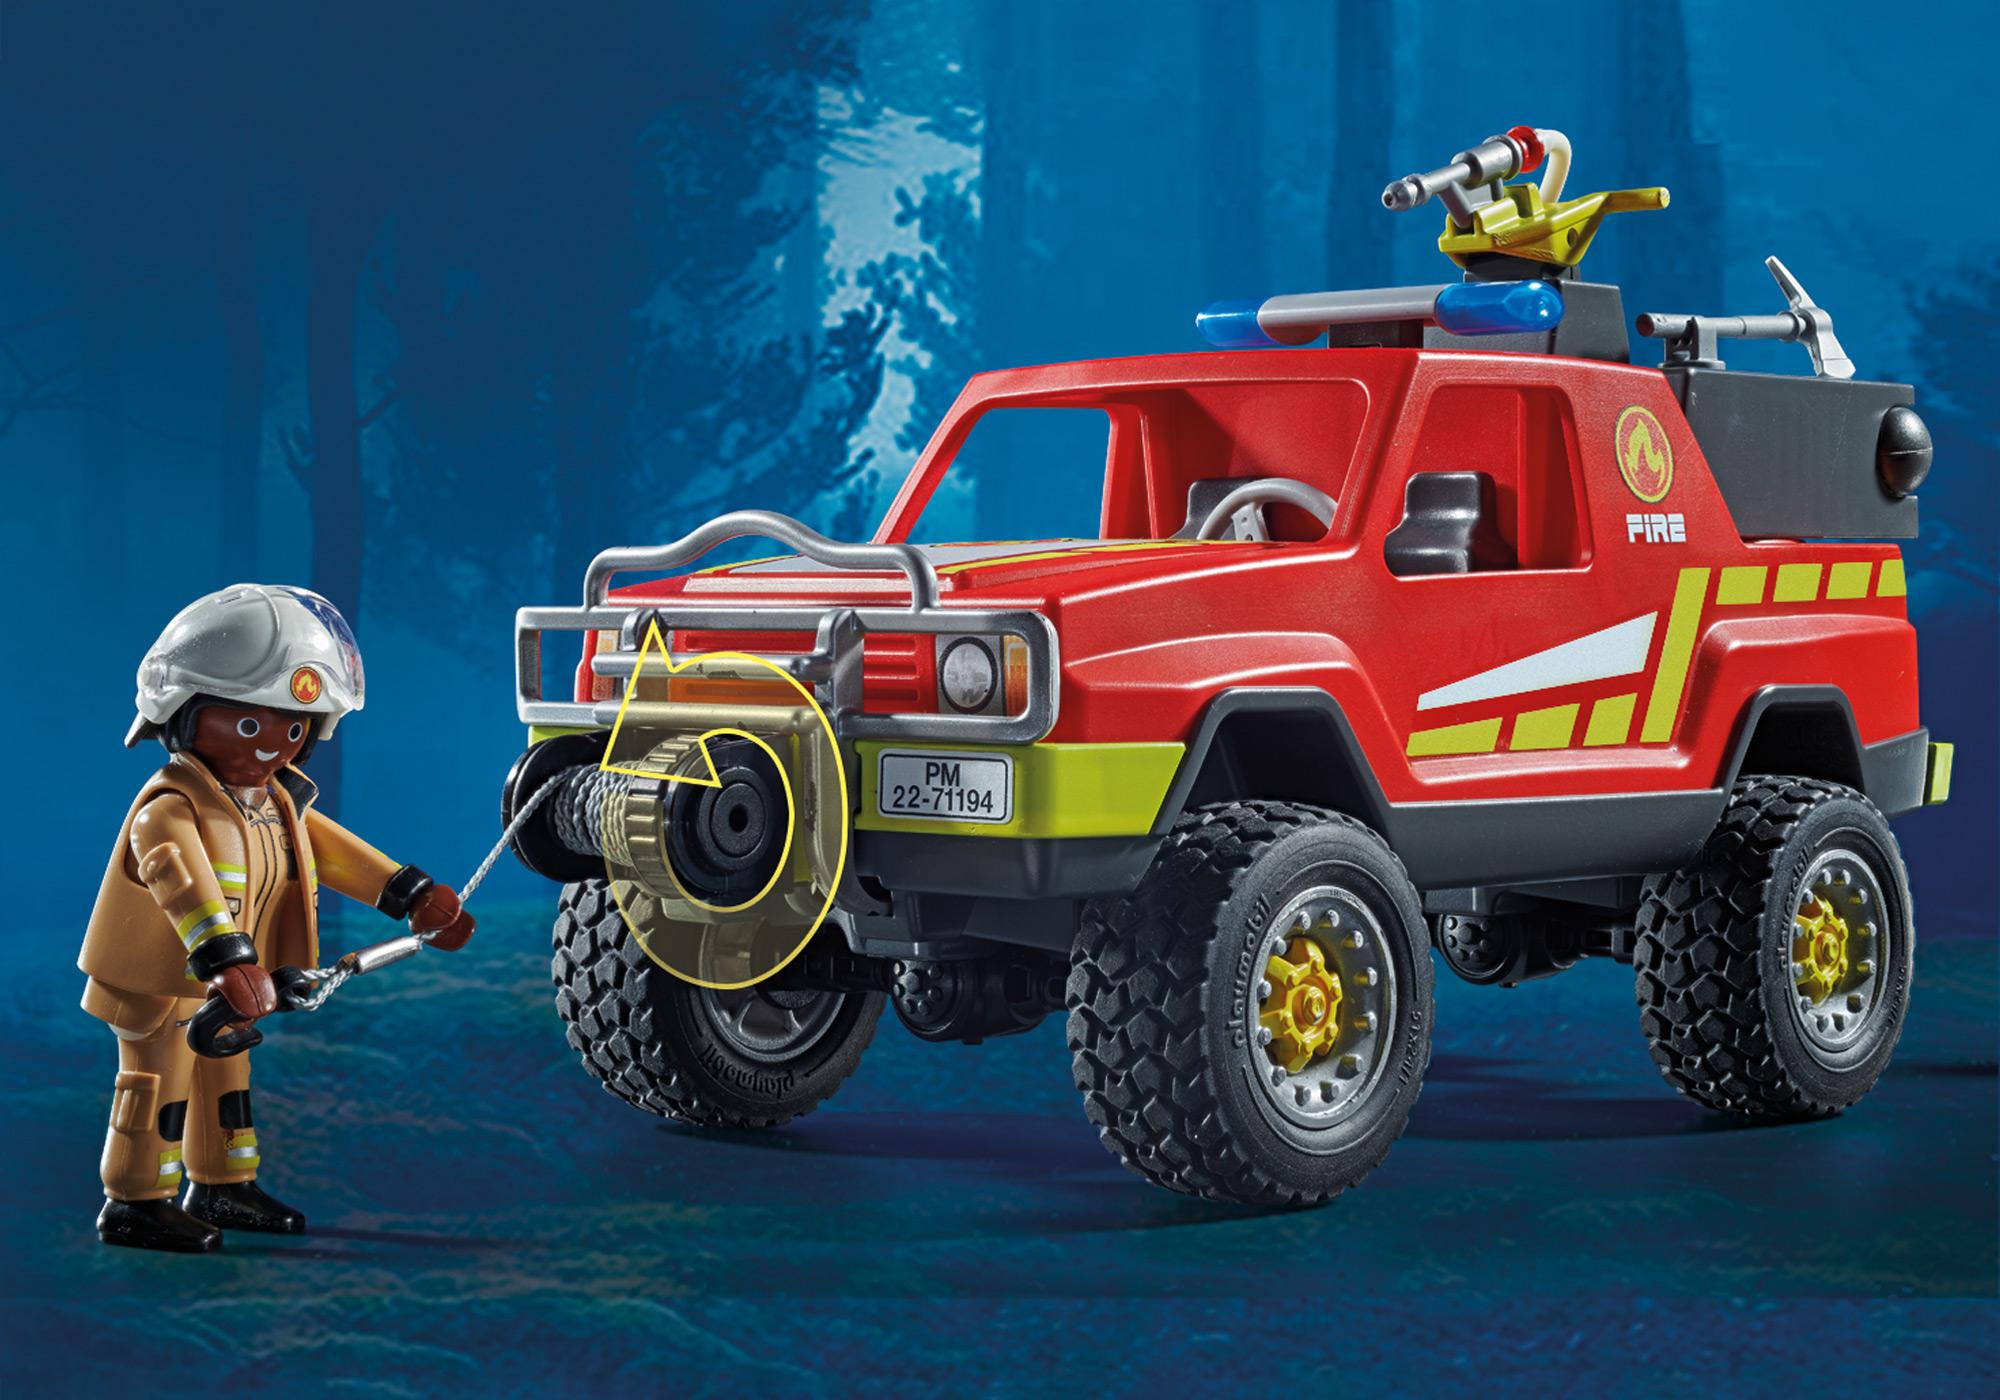 71194 Pick-up et pompier Playmobil City Action - TECIN HOLDING